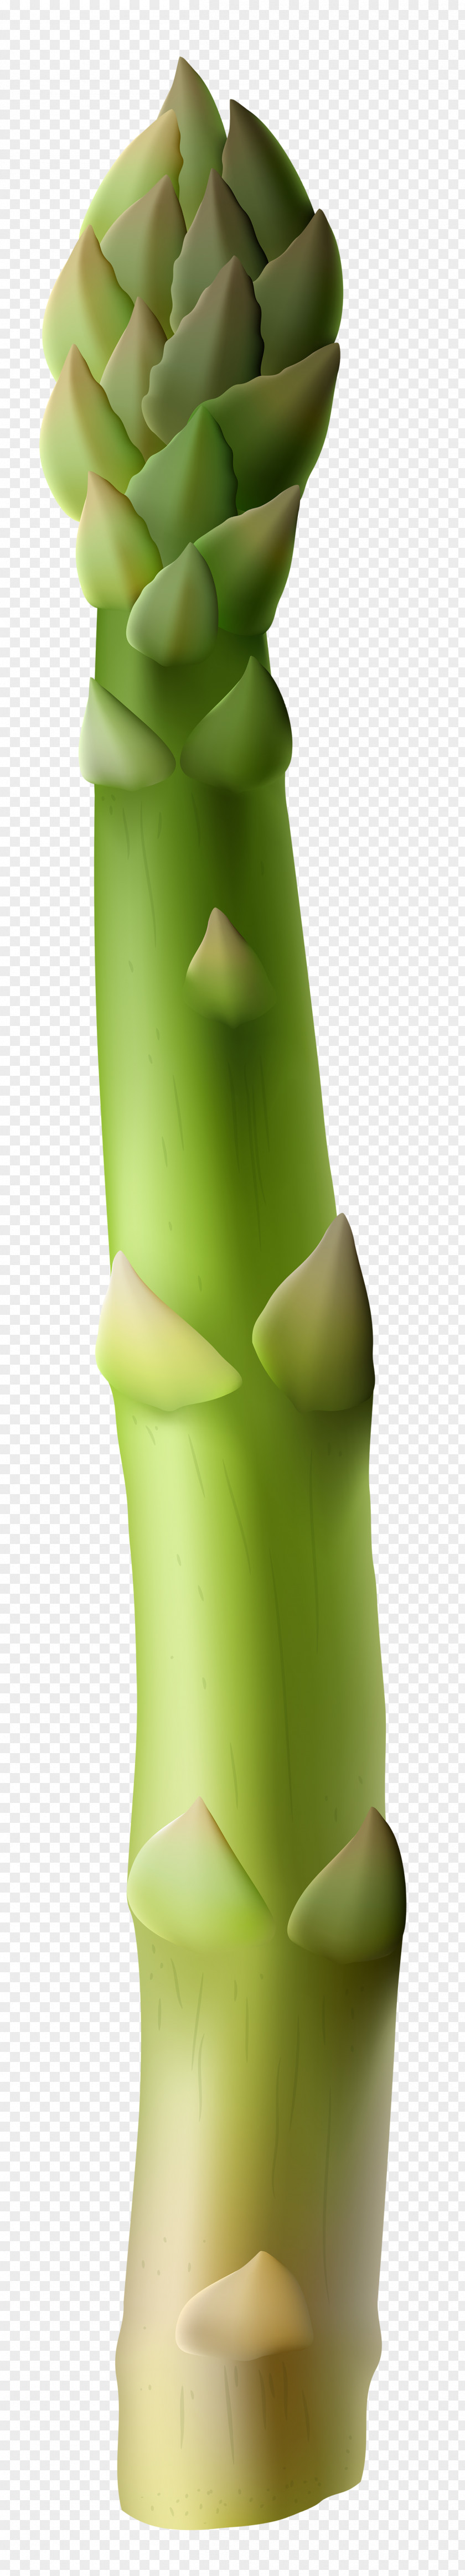 Asparagus Clip Art Image Vase Design Product PNG